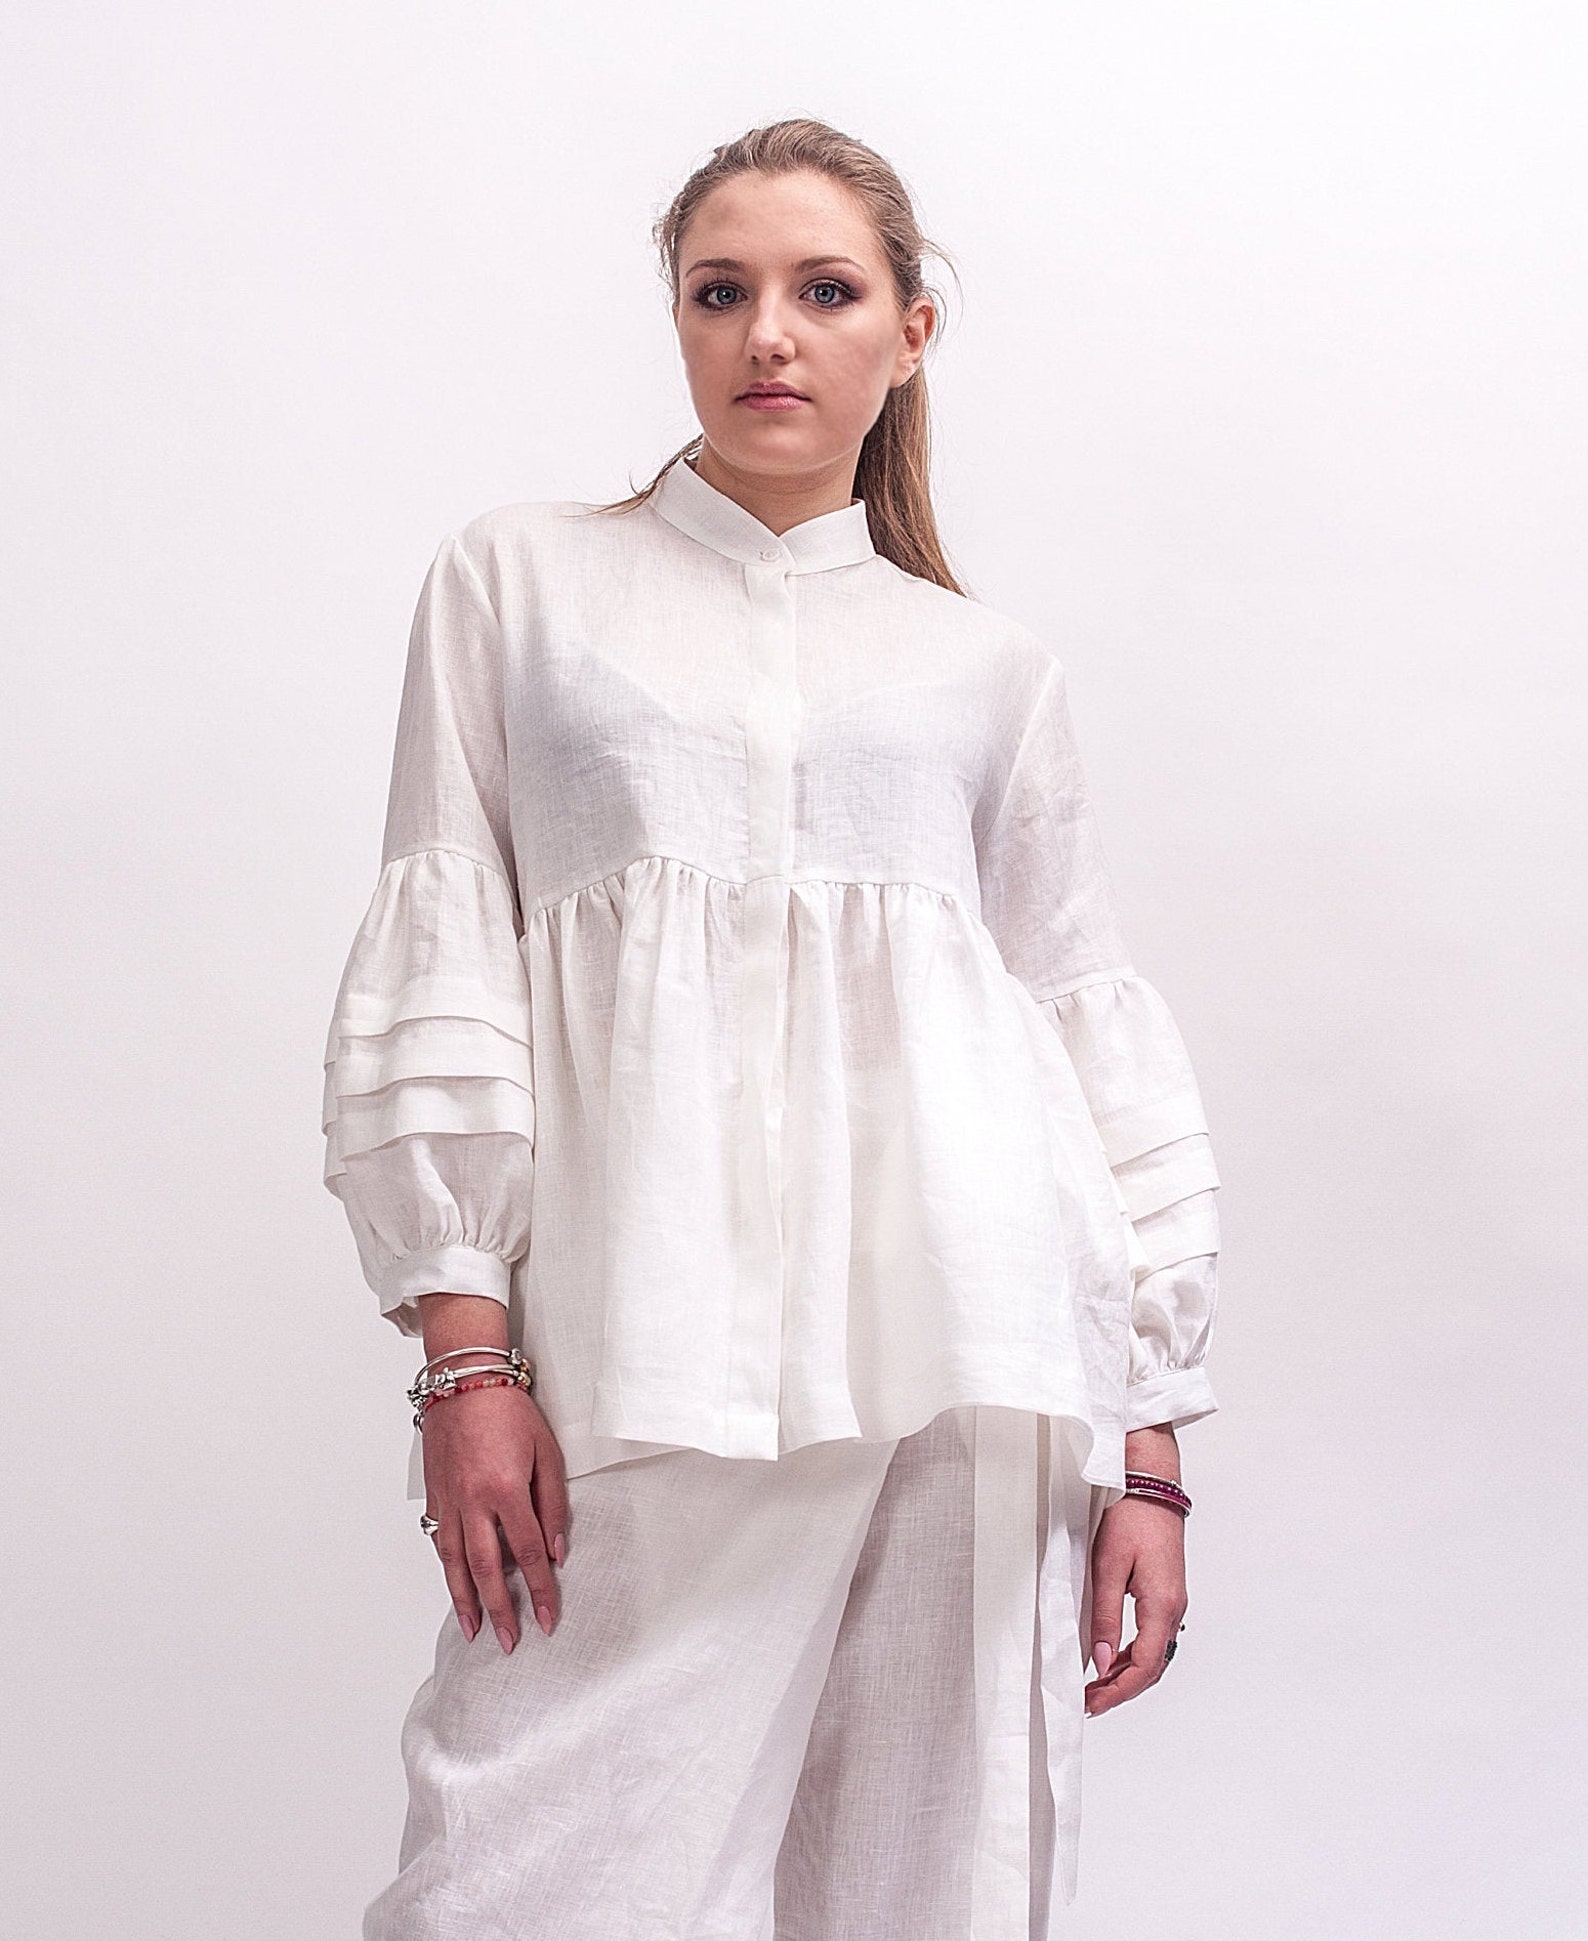 Womens linen top plus size clothing for women White linen | Etsy